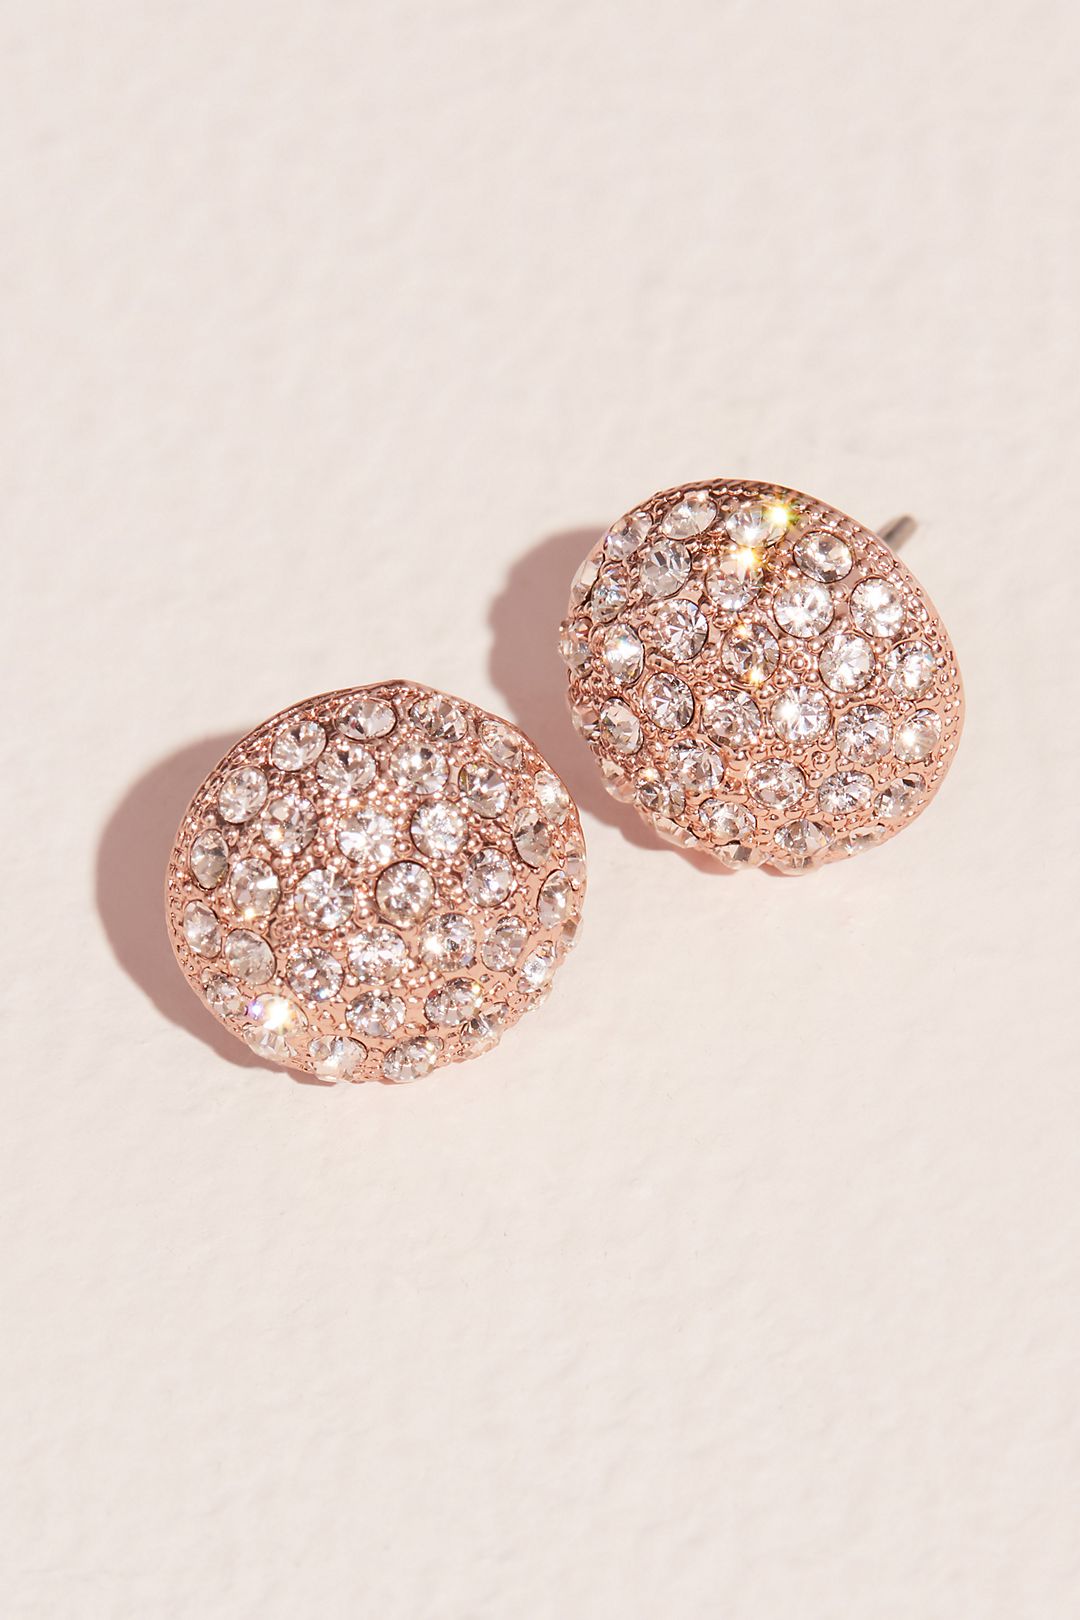 Pave Swarovski Crystal Button Stud Earrings Image 1